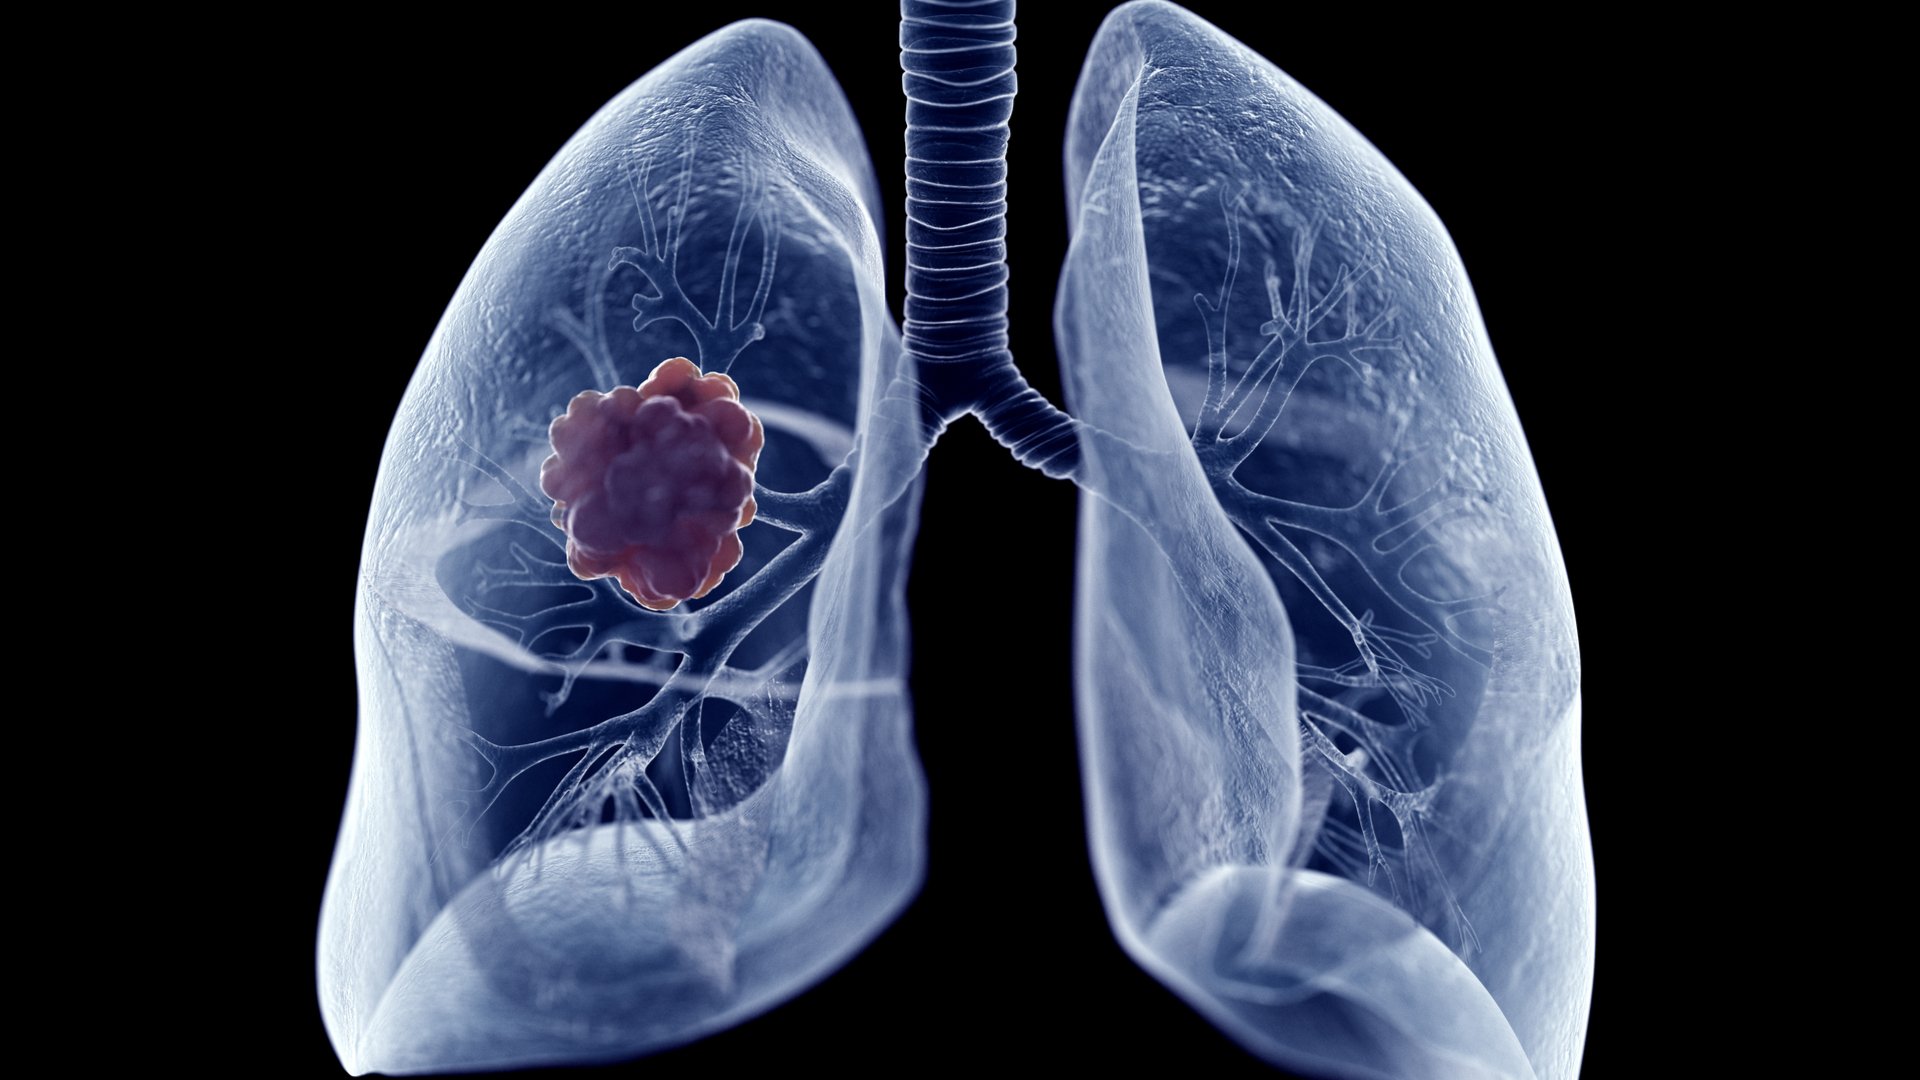 dia mundial del cancer de pulmon